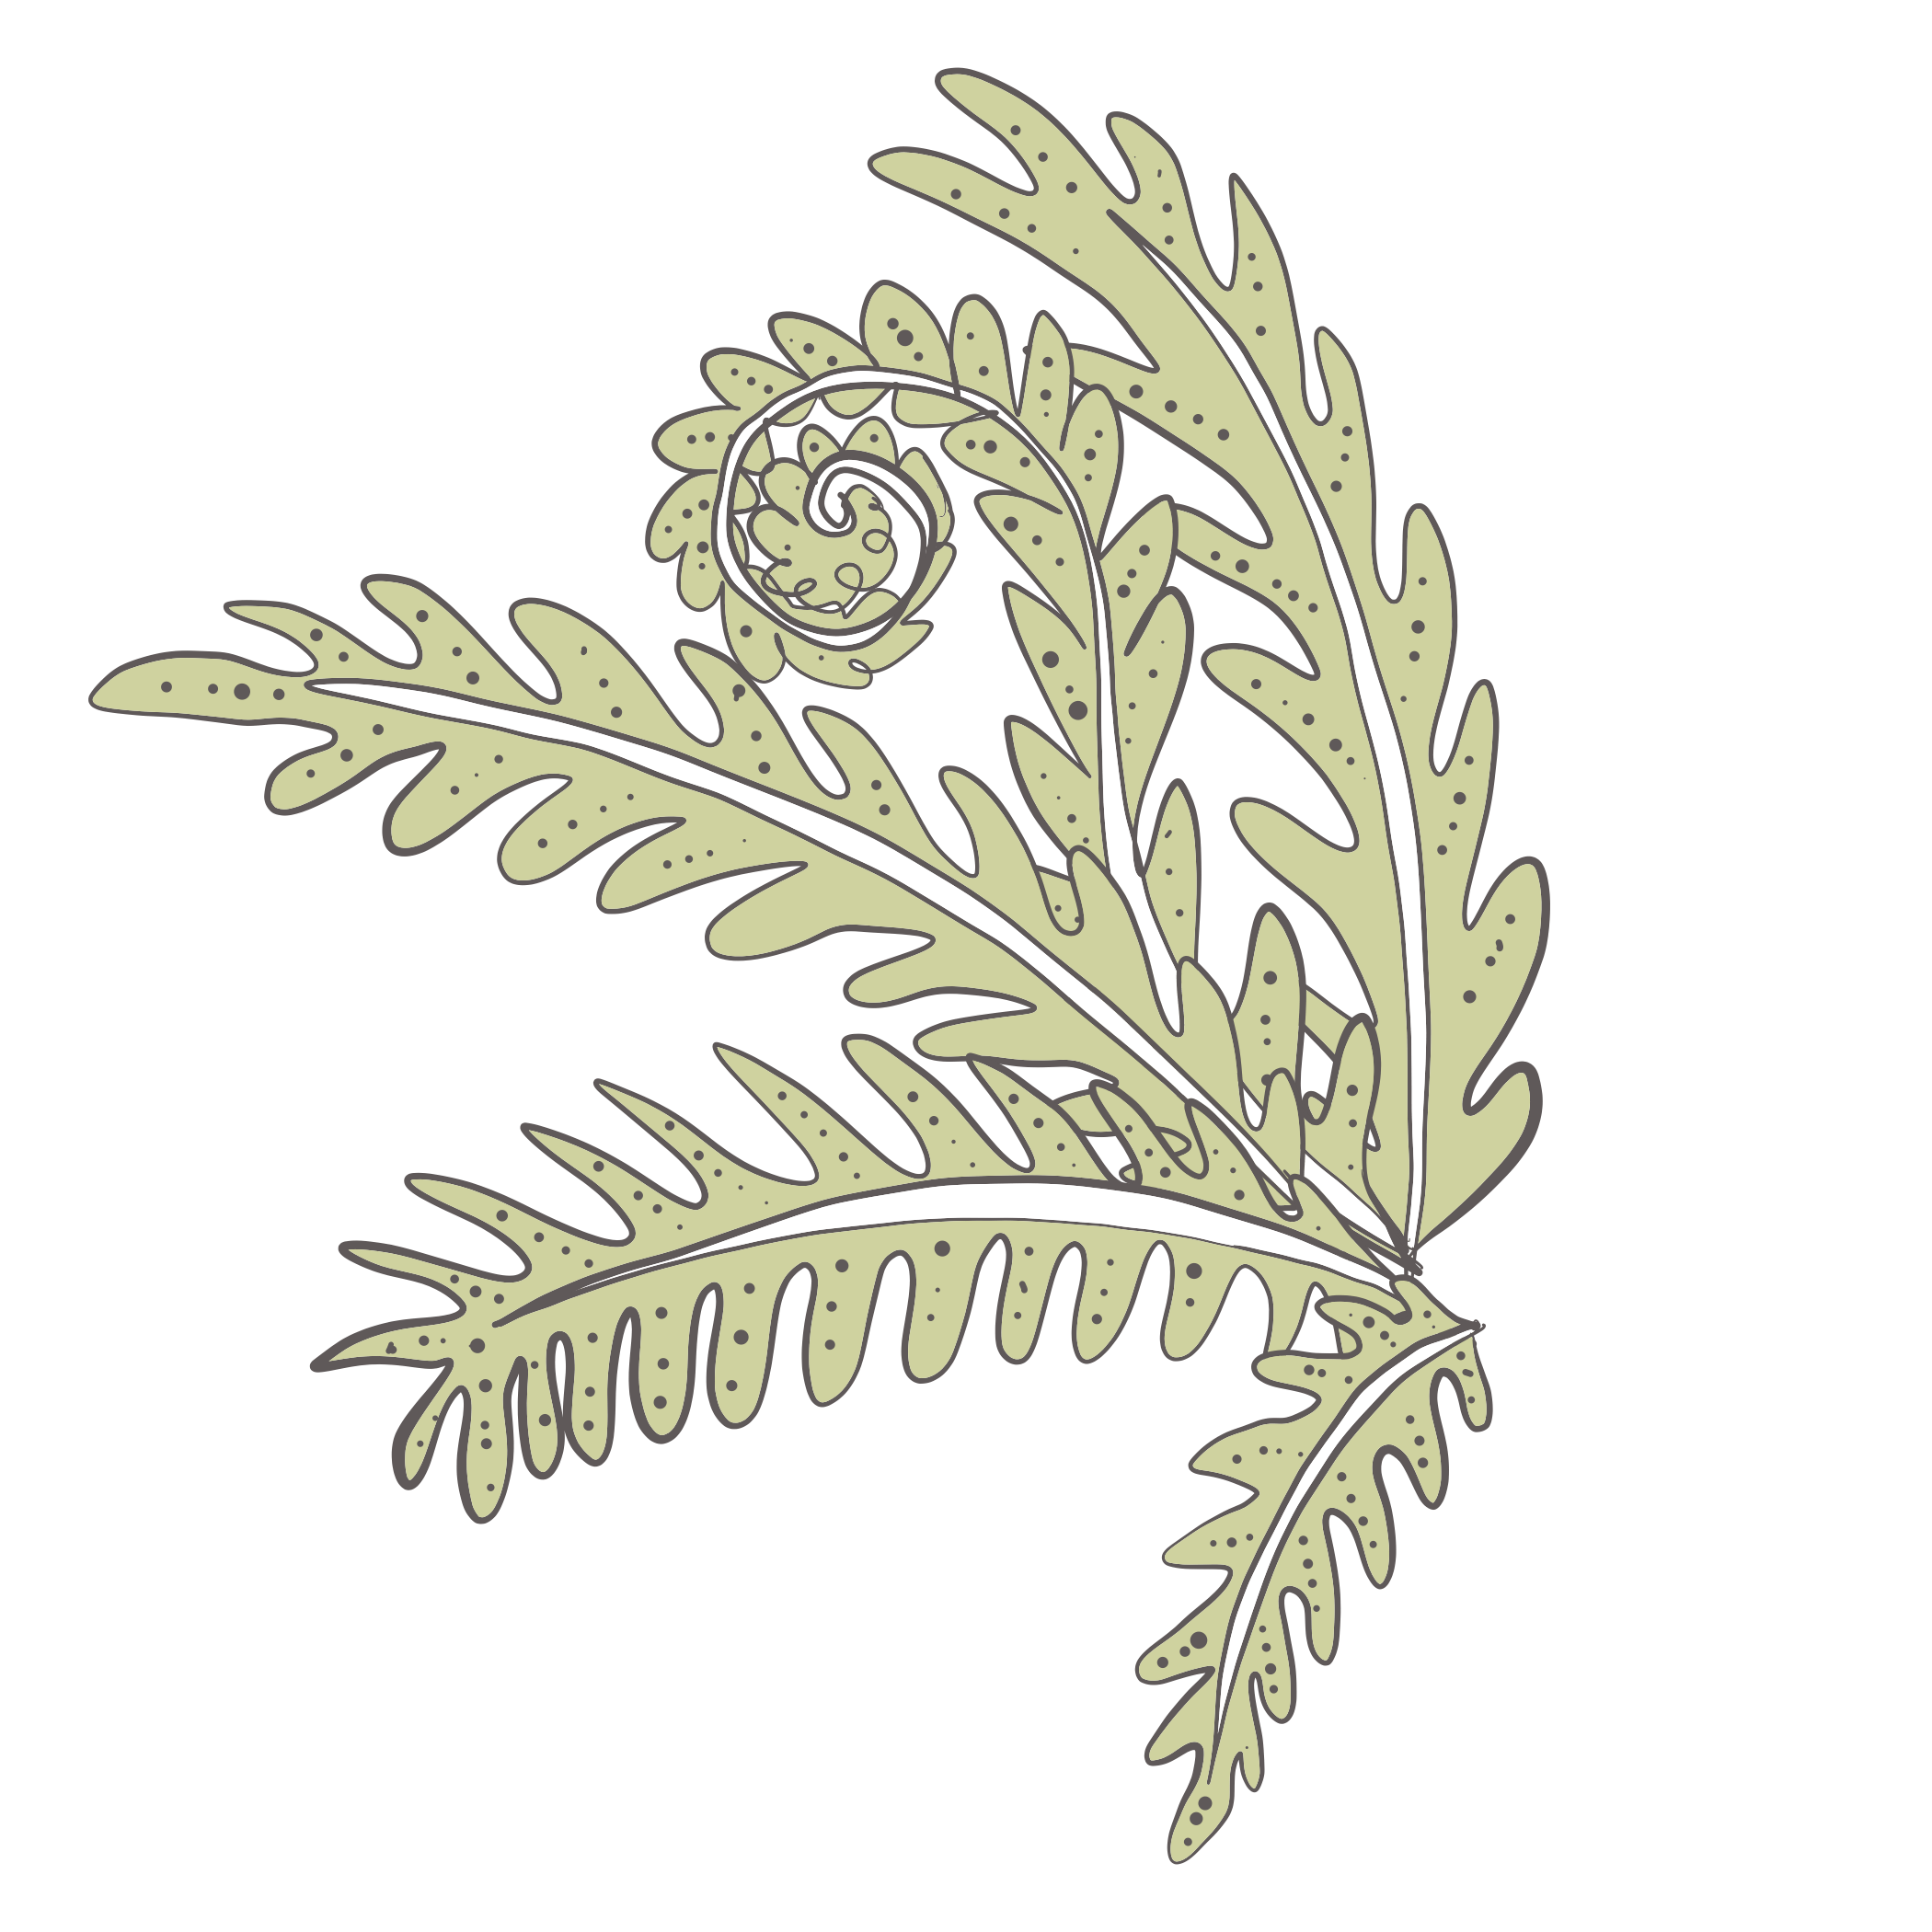 An illustration of four fern fronds unfurling